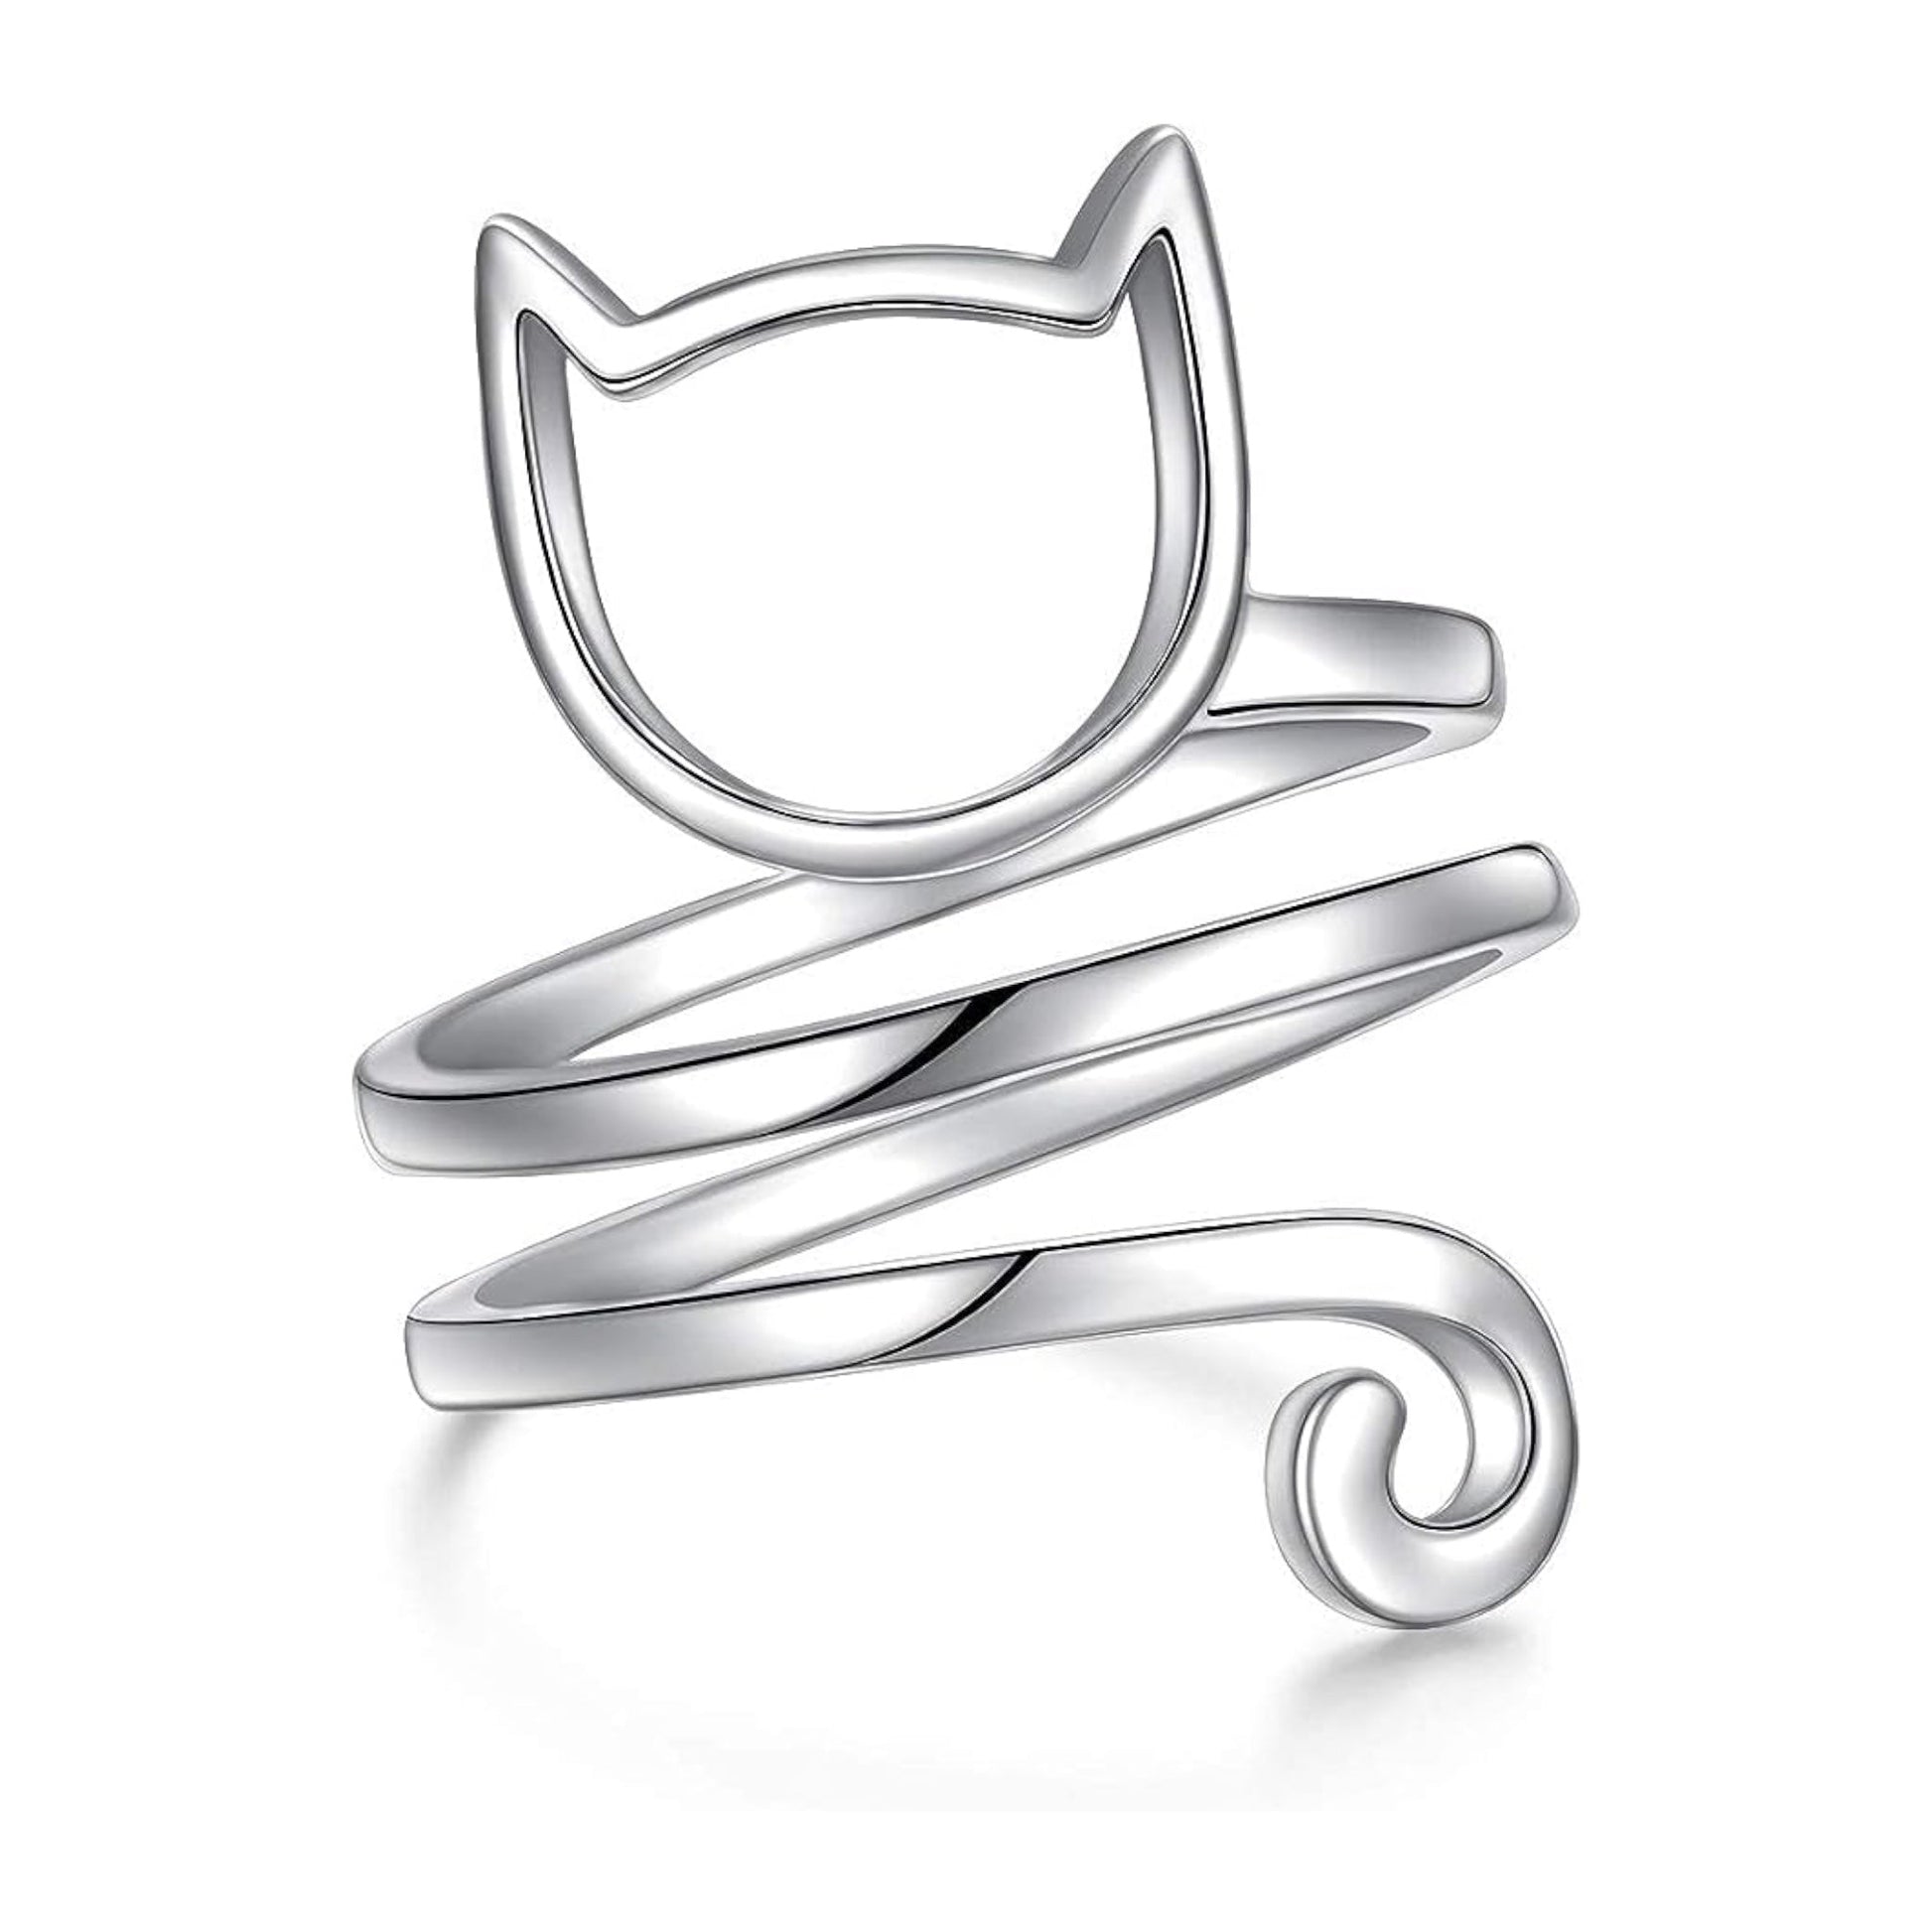 Curled Cat Elegance Ring - getallfun